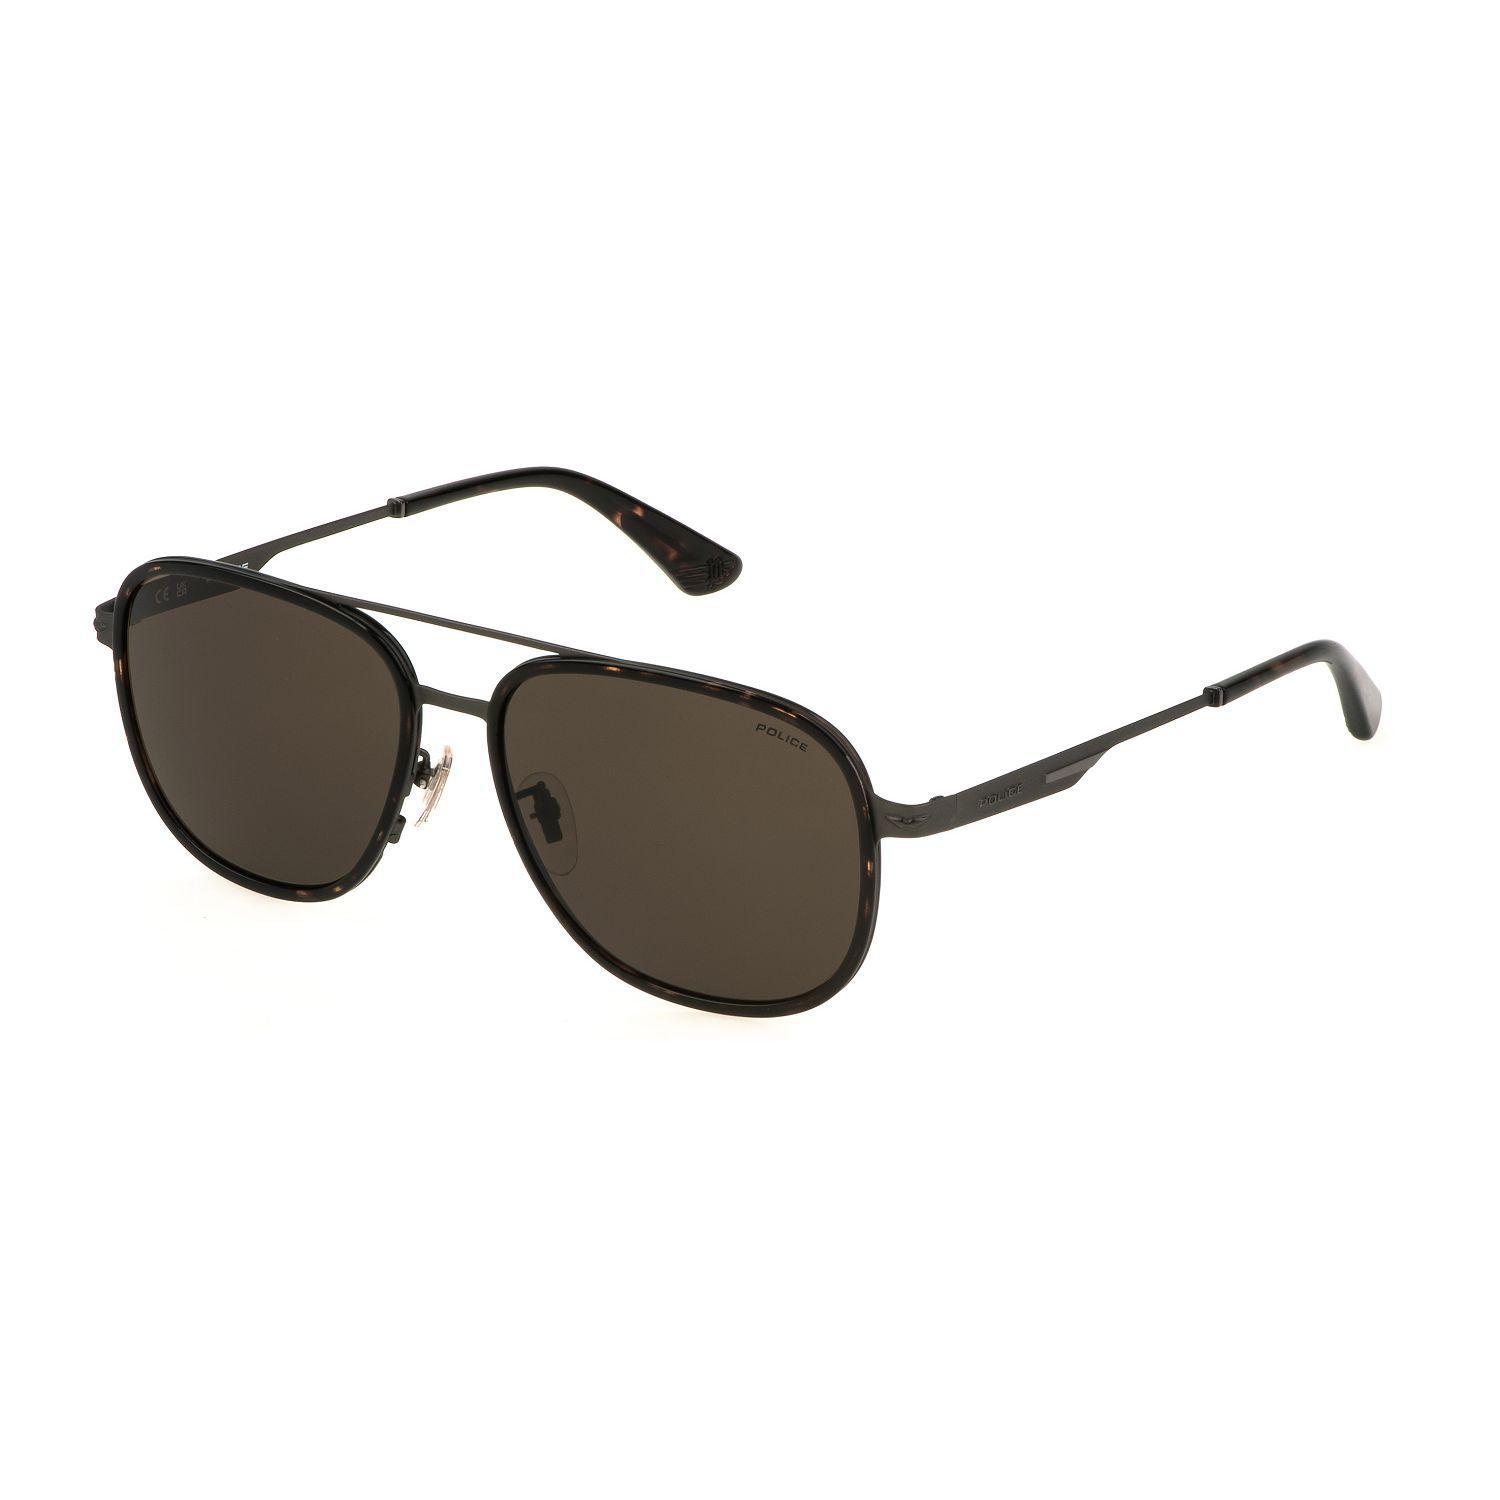 SPLL78M Square Sunglasses 0627 - size 58